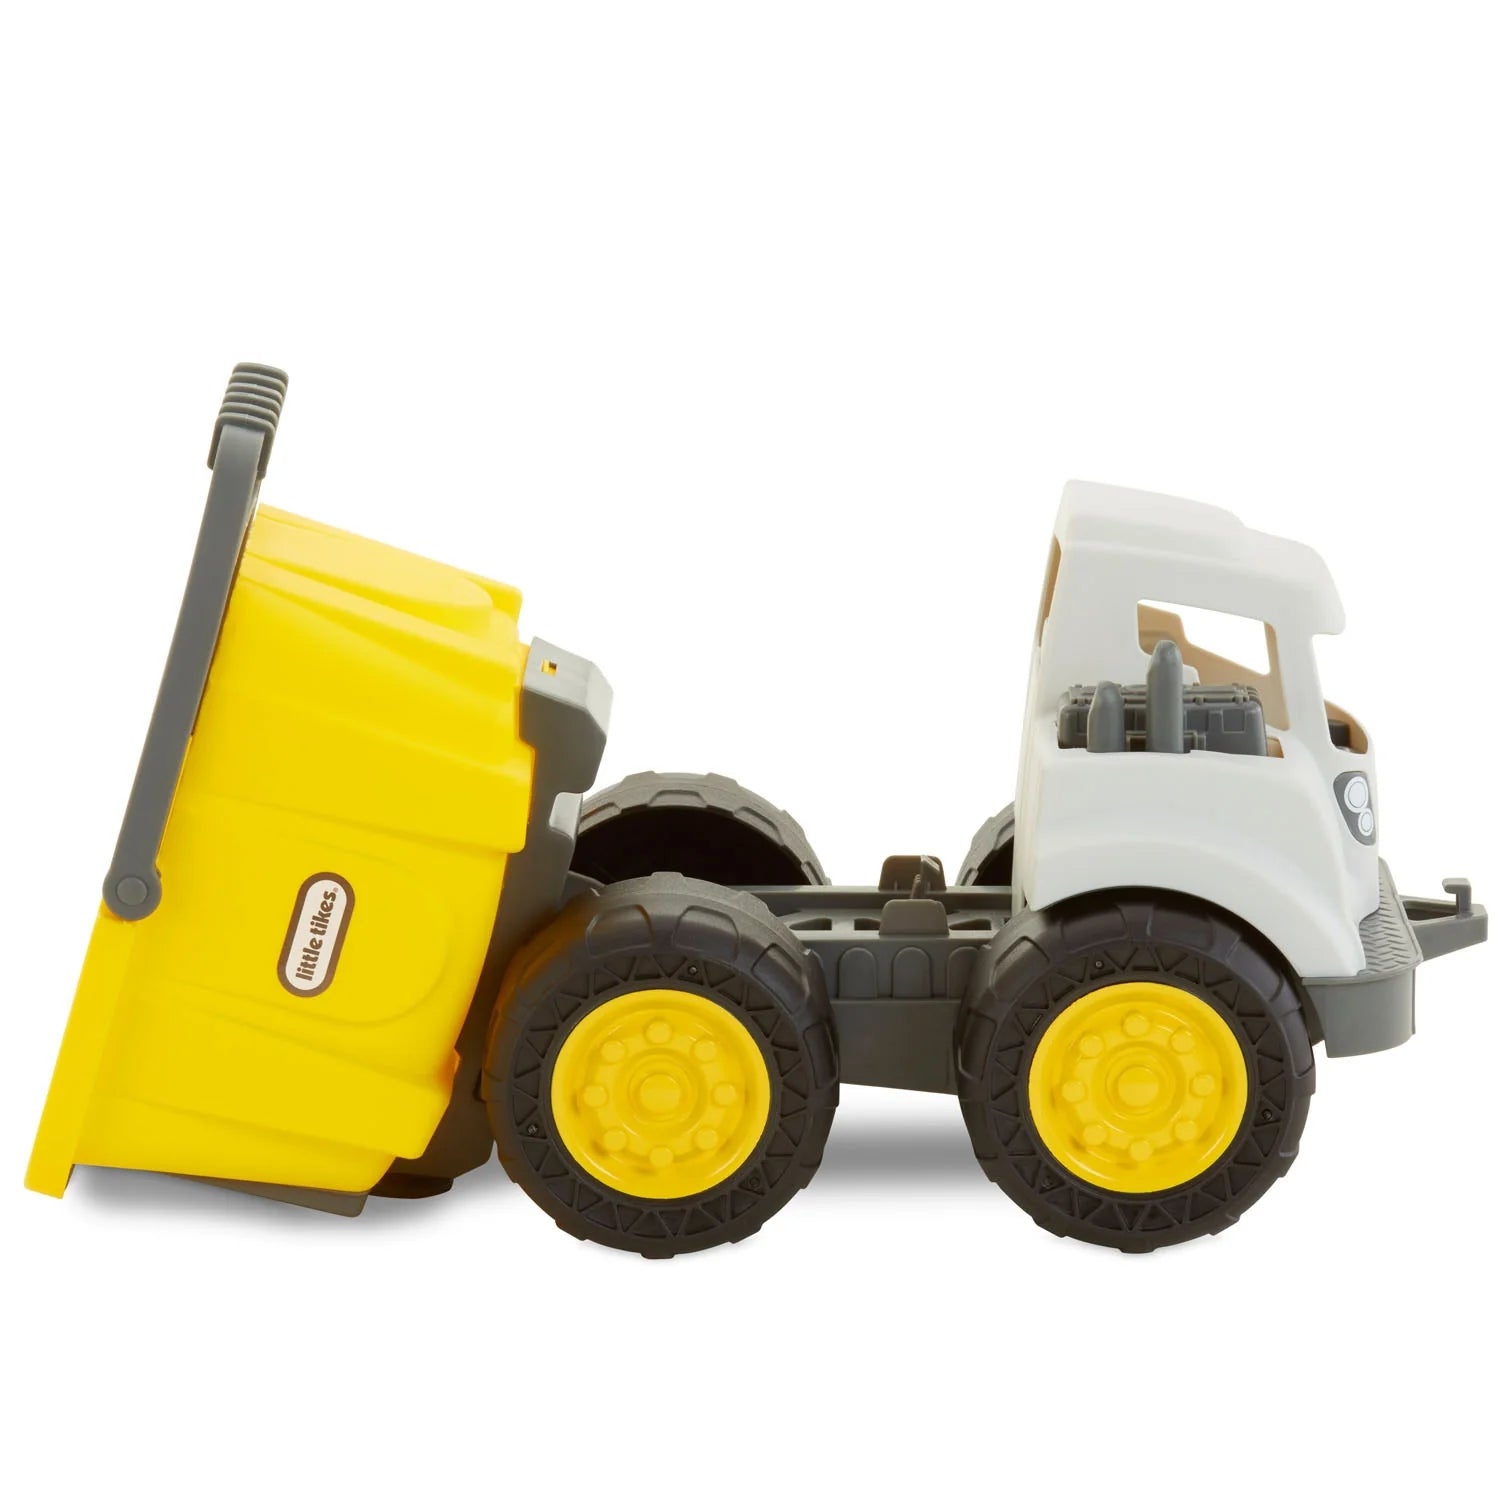 Little Tikes Dirt Digger™ 2-IN-1 Haulers Dump Truck - Yellow